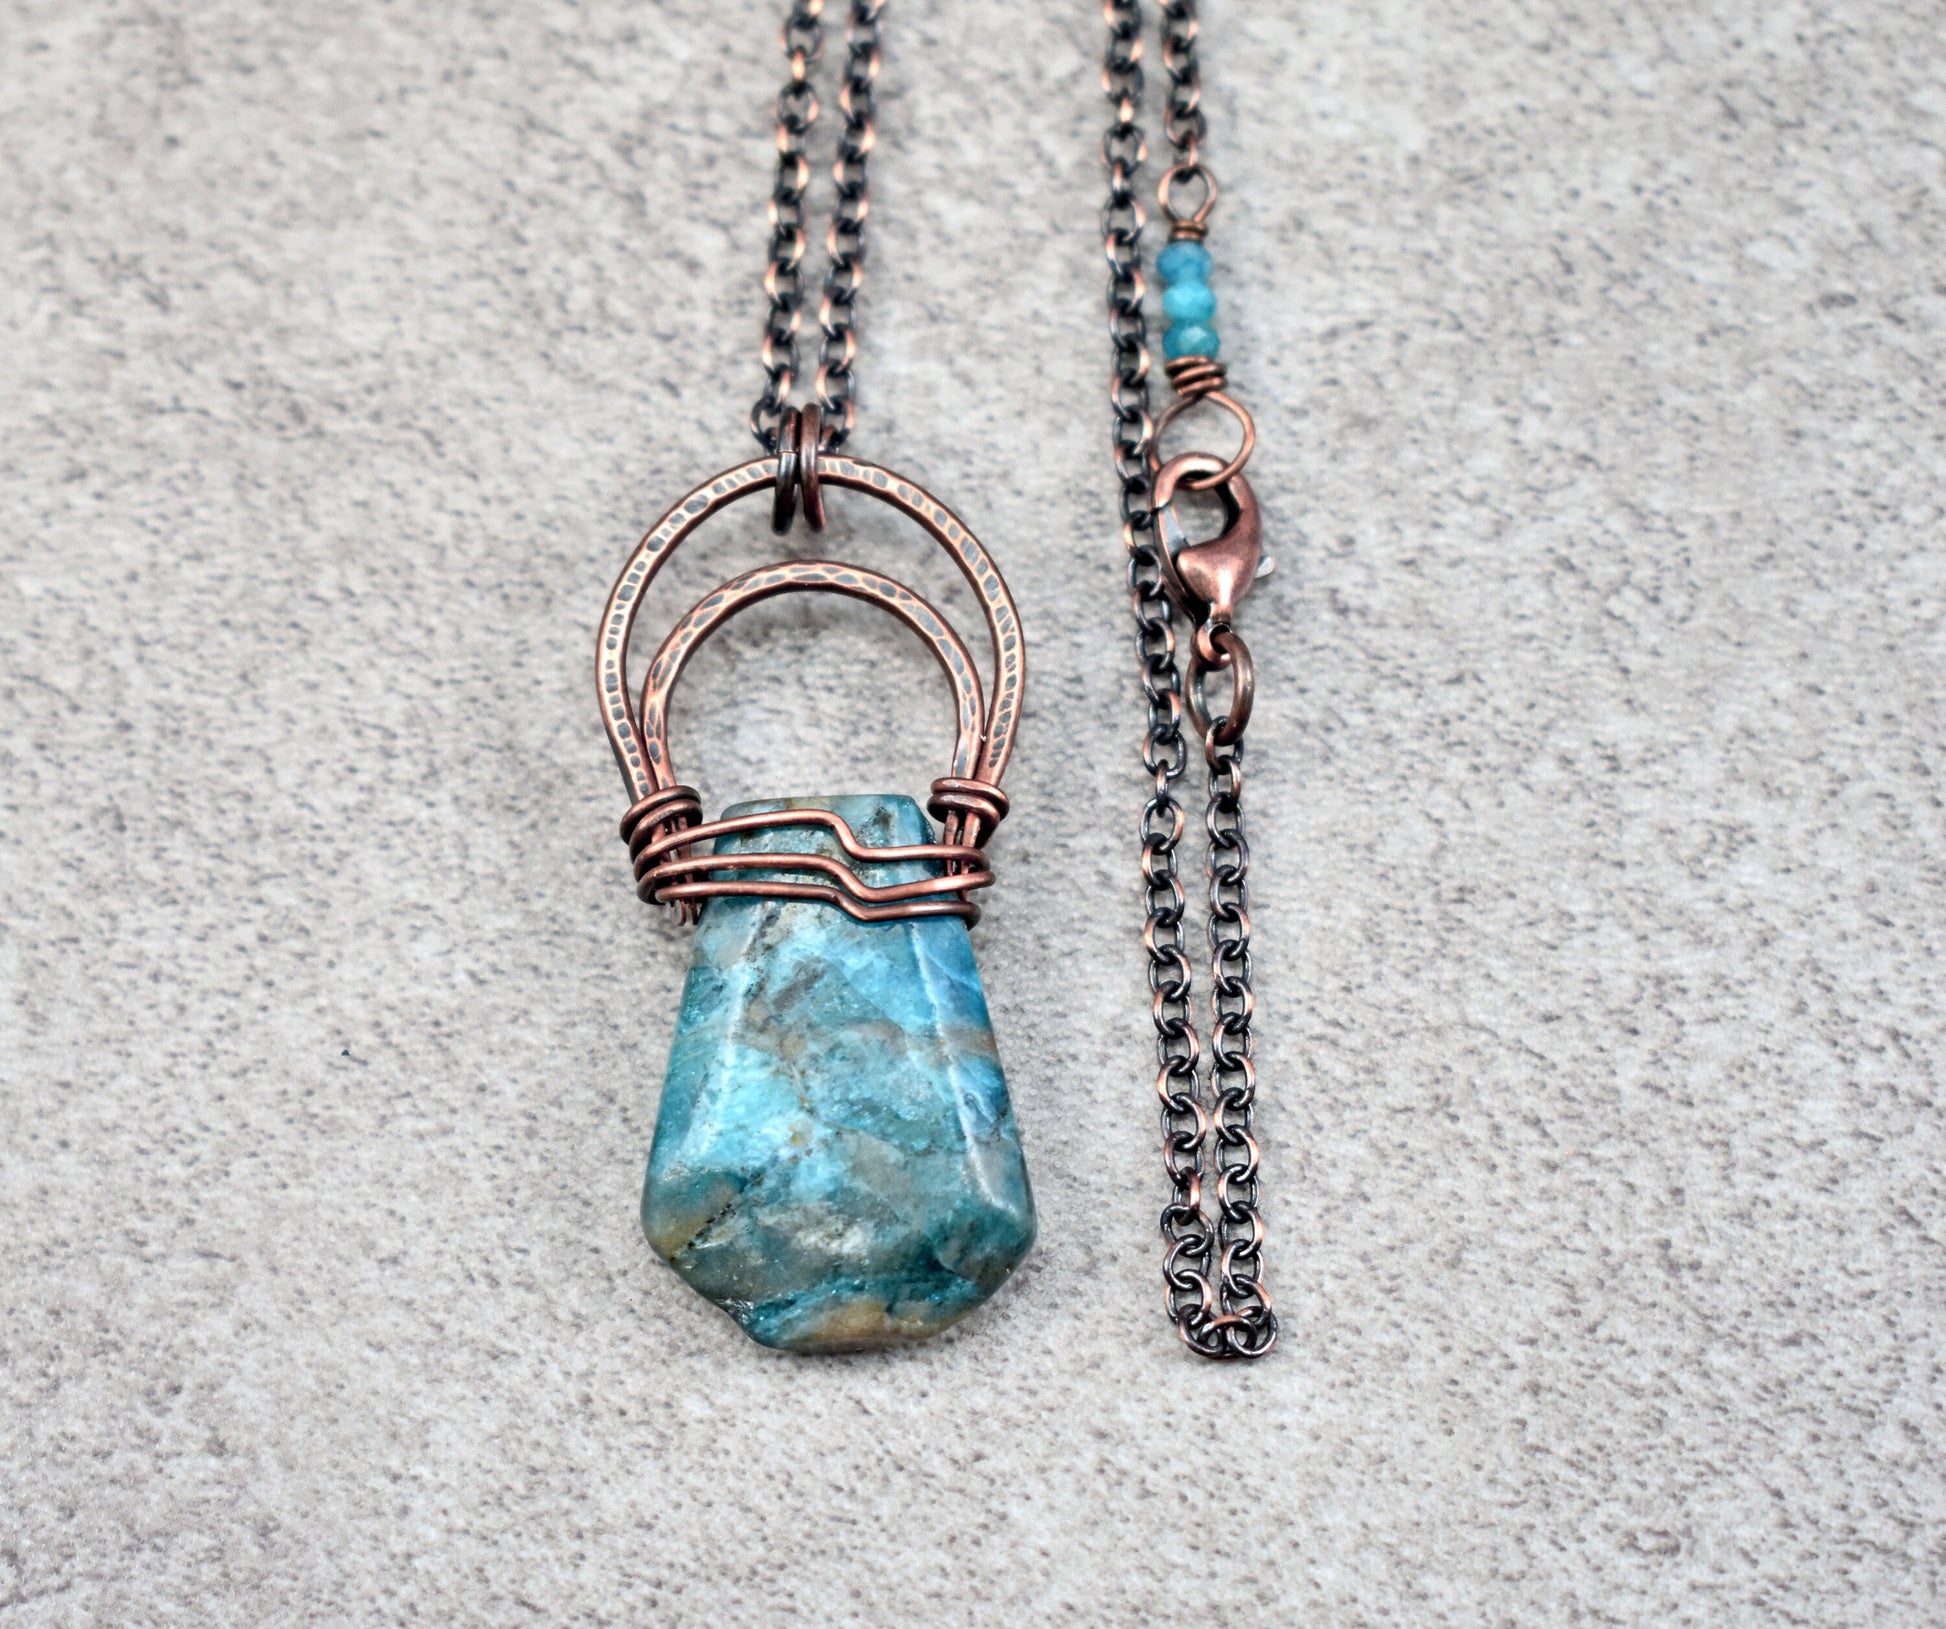 Apatite Necklace Handmade, Dark Teal Gemstone Jewelry, Hammered Copper Wire Pendant, Unique Rustic Artisan Metalwork